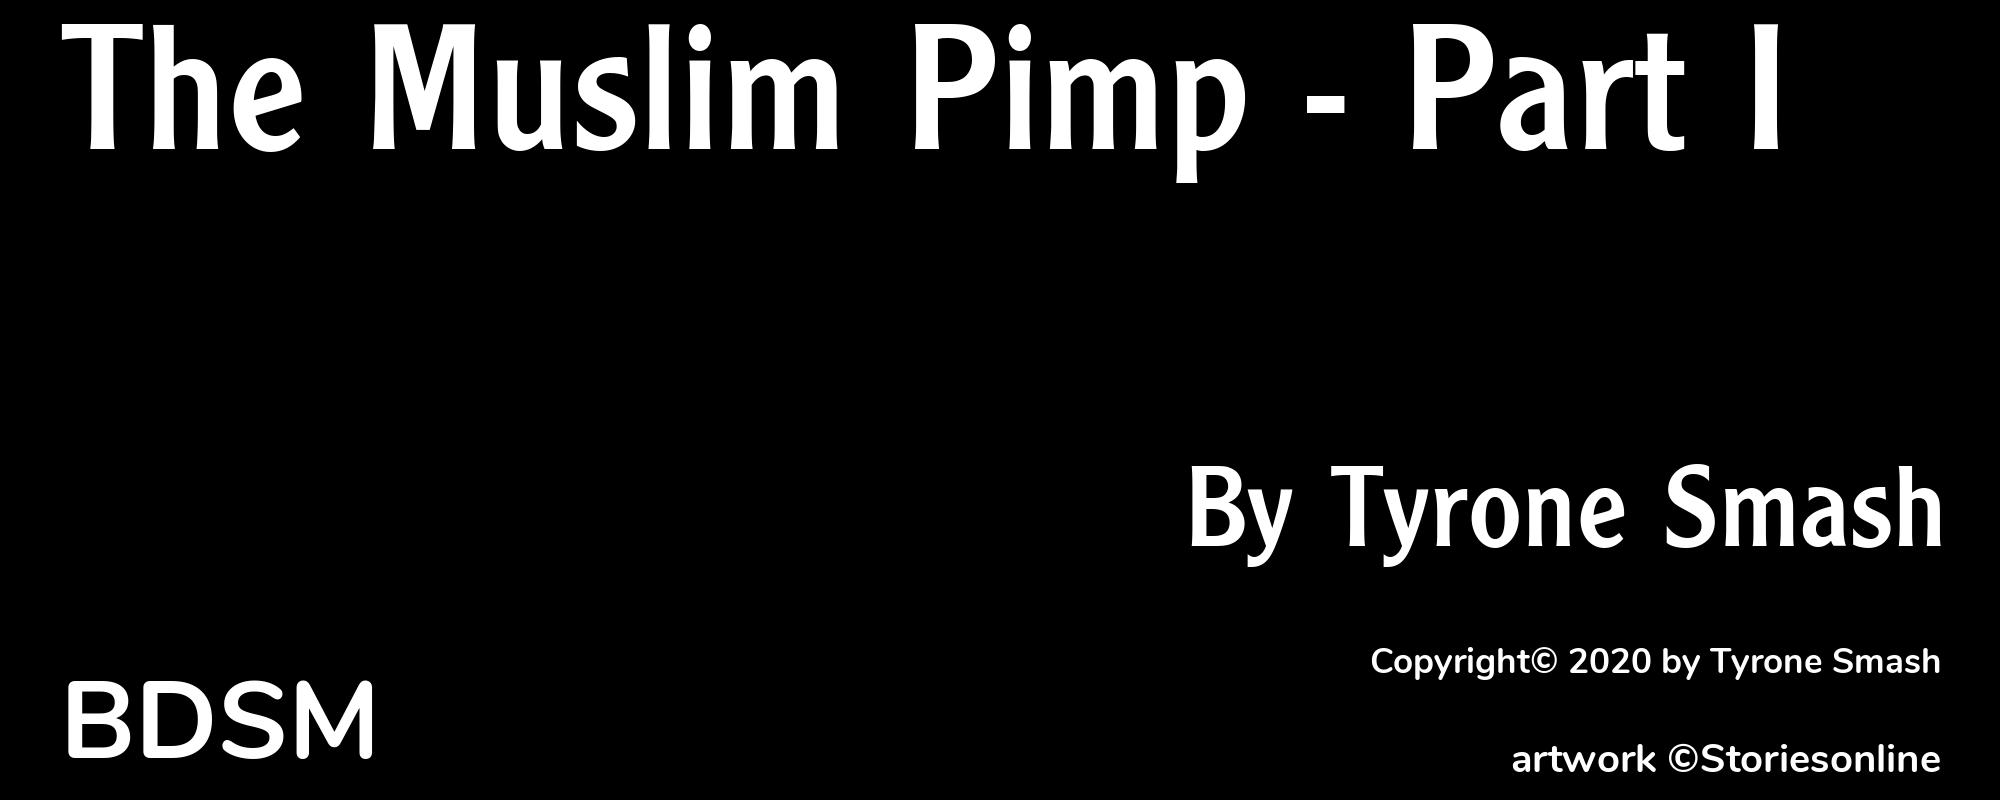 The Muslim Pimp - Part I - Cover